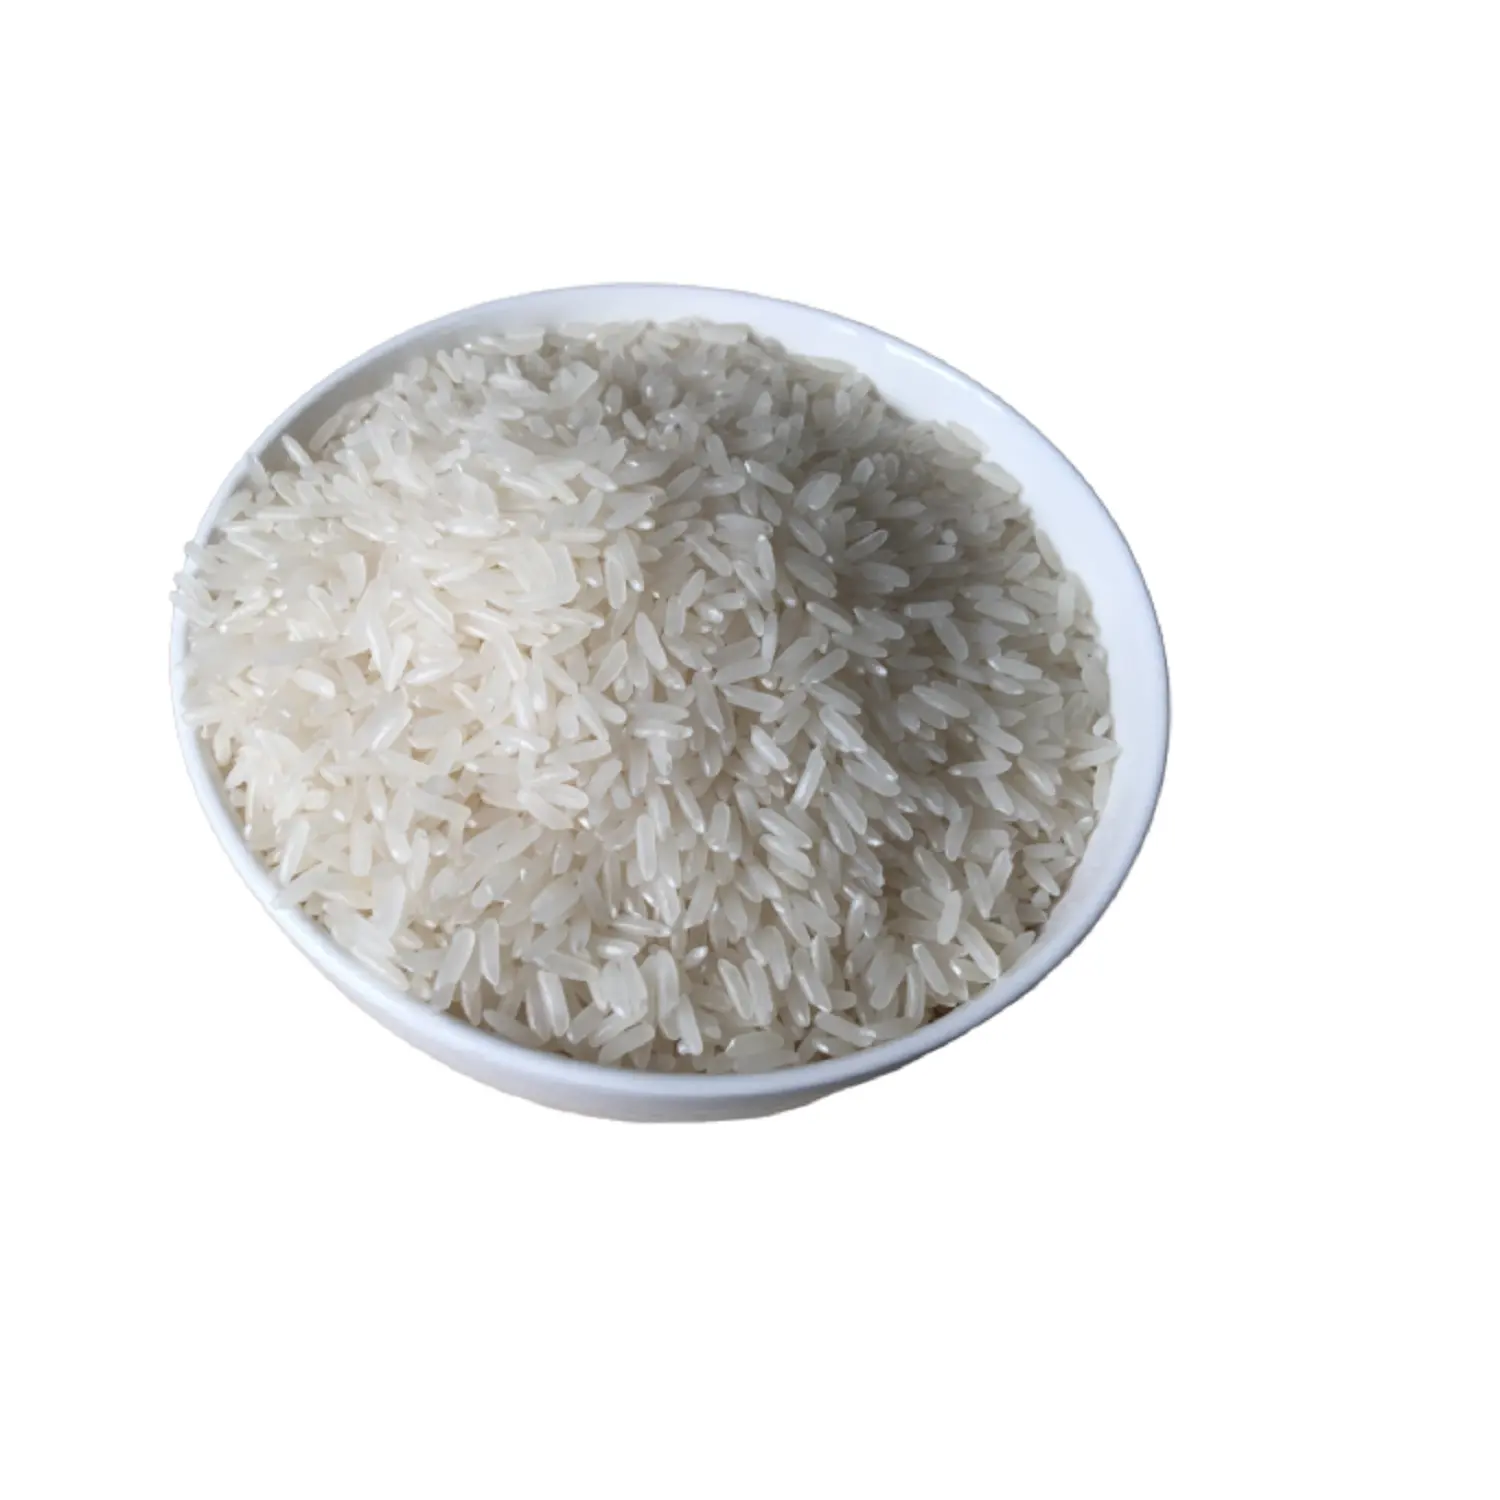 Sıcak satış ihracat kalite kanada'dan Canad aBasmati pirinç 1121 beyaz sella buhar Basmati pirinç